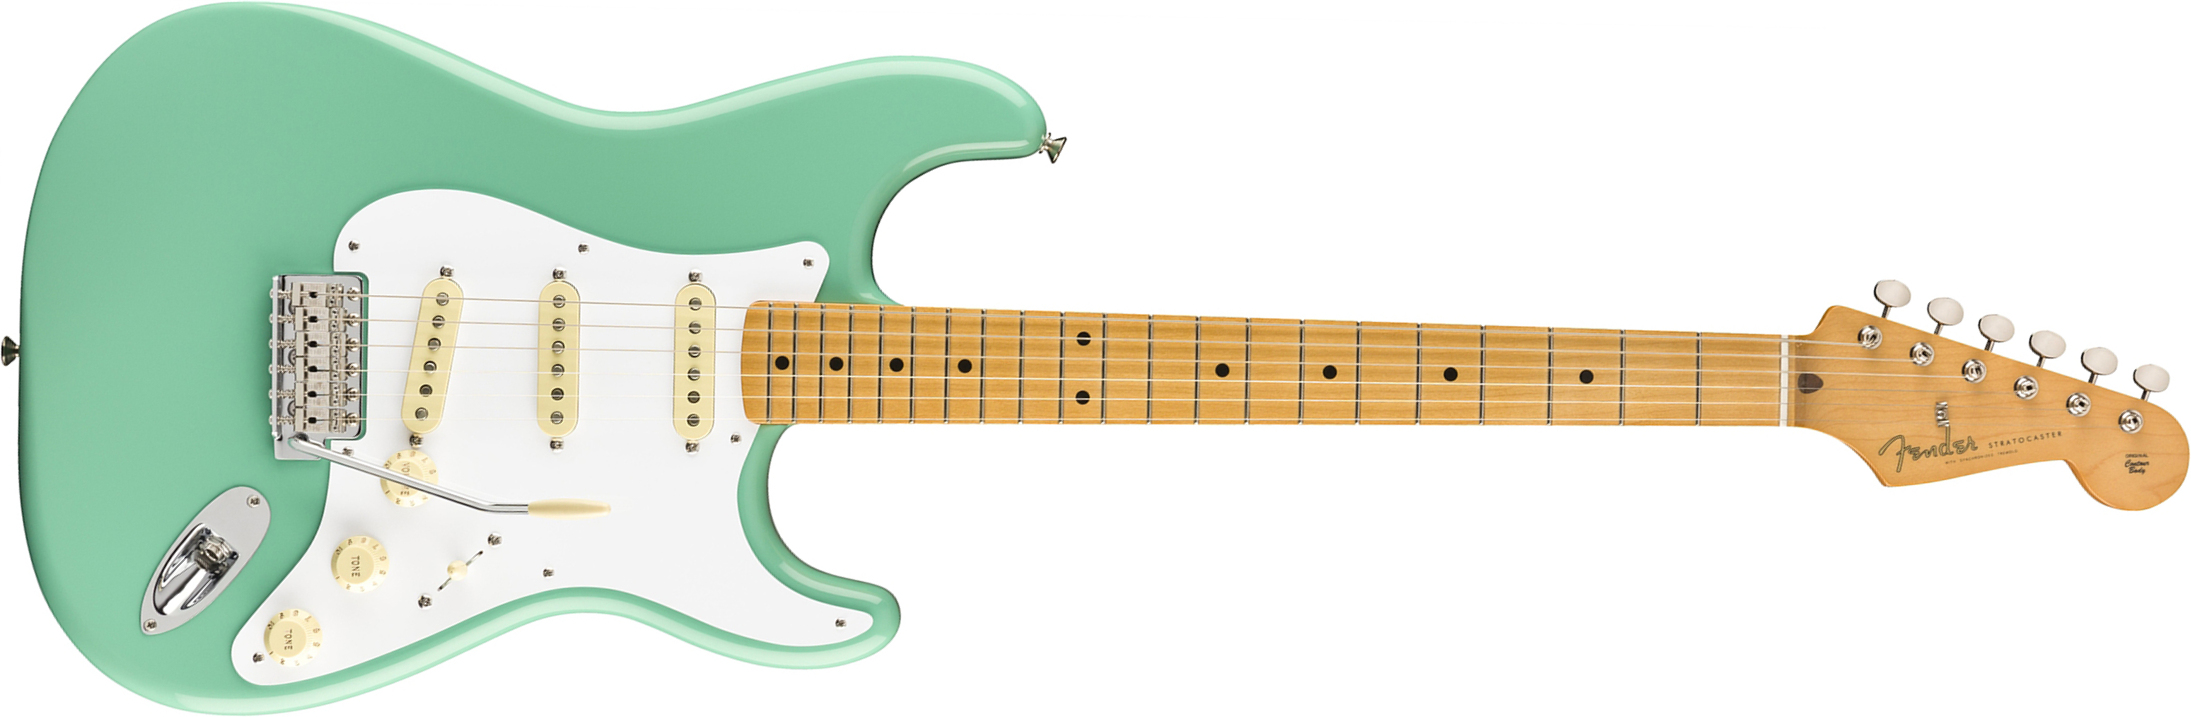 Fender Strat 50s Vintera Vintage Mex Mn - Seafoam Green - Str shape electric guitar - Main picture